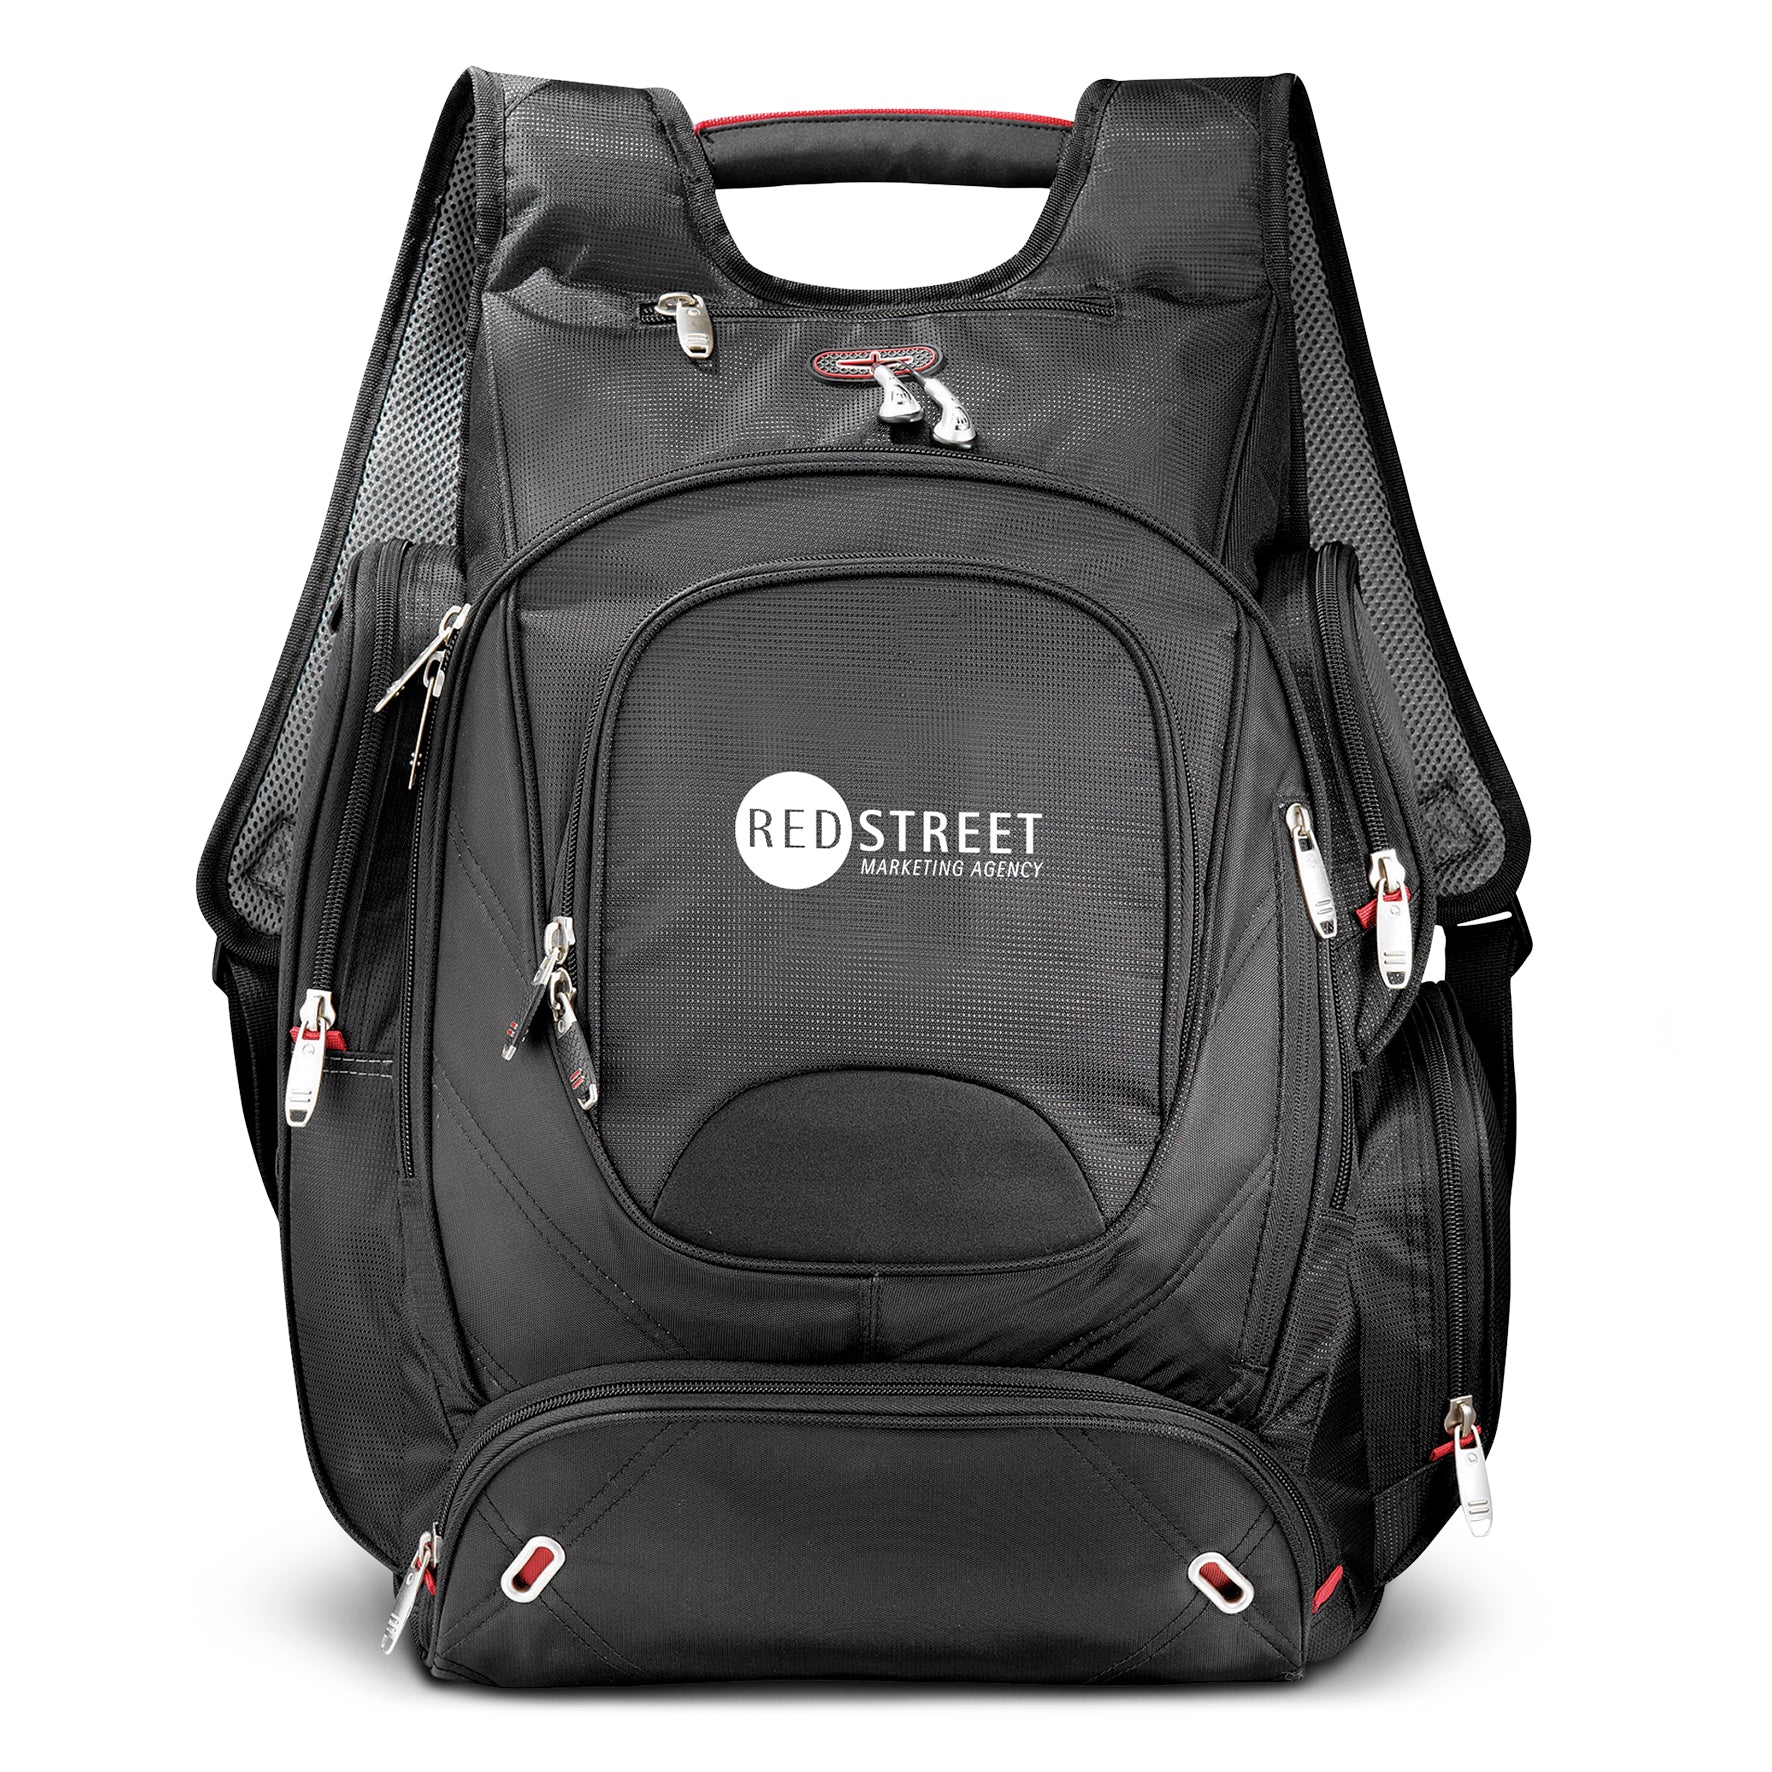 Impulse Laptop Backpack